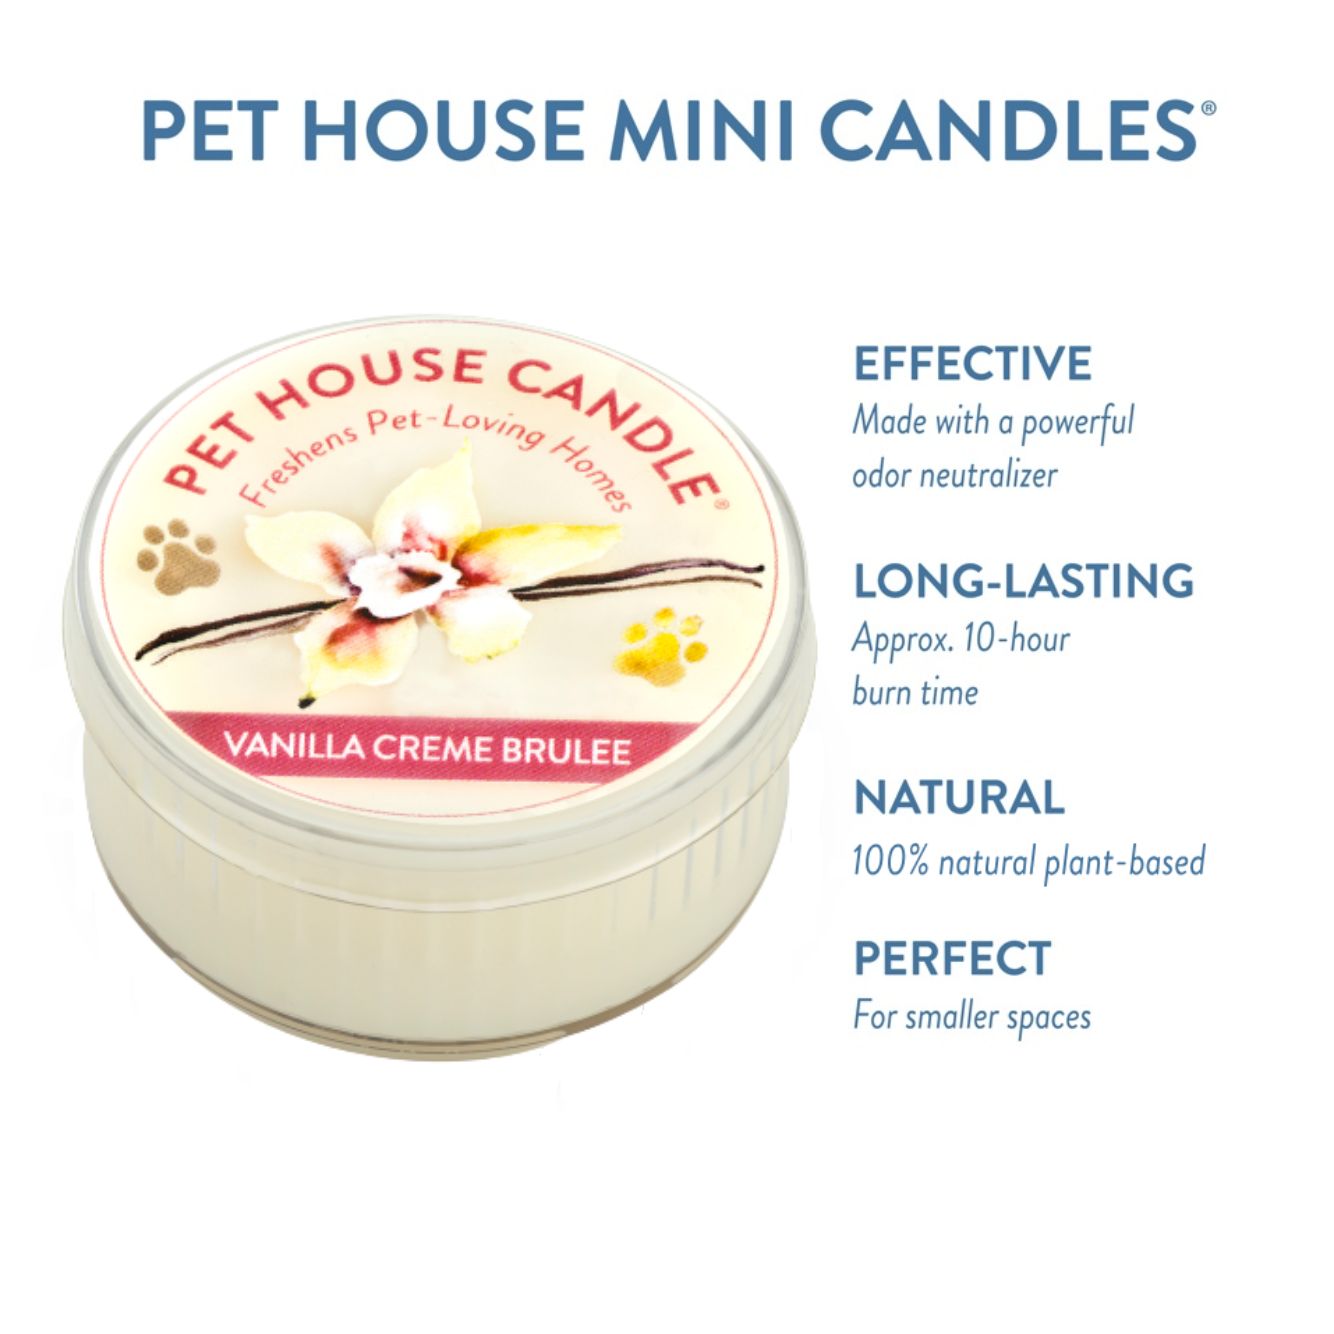 Vanilla Creme Brulee Mini Candle infographics